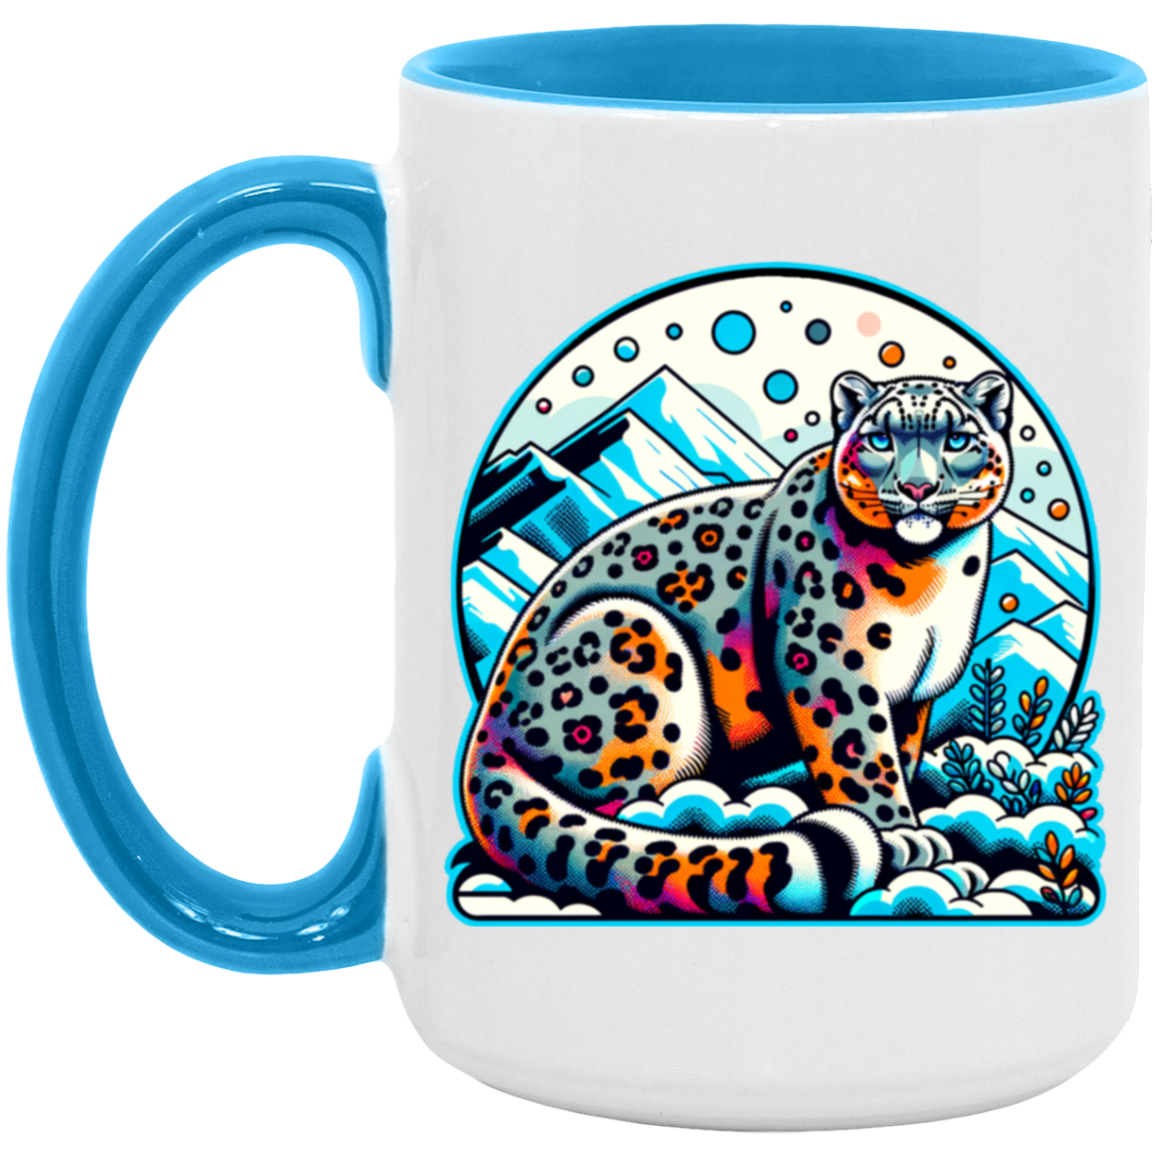 Snow Leopard Graphic Mugs